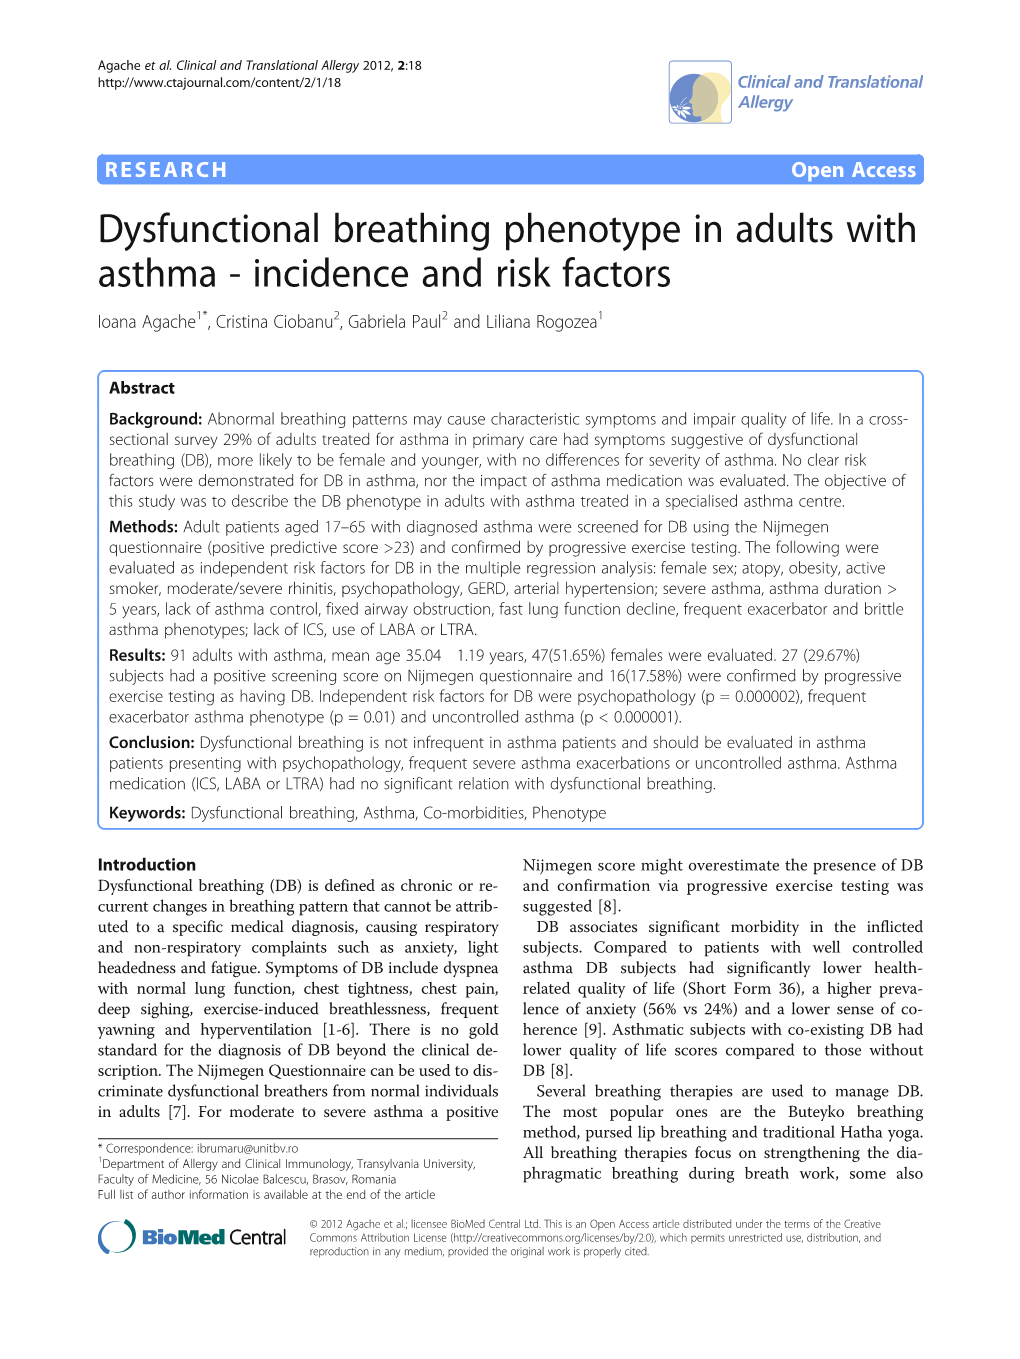 Dysfunctional Breathing Phenotype in Adults with Asthma - Incidence and Risk Factors Ioana Agache1*, Cristina Ciobanu2, Gabriela Paul2 and Liliana Rogozea1